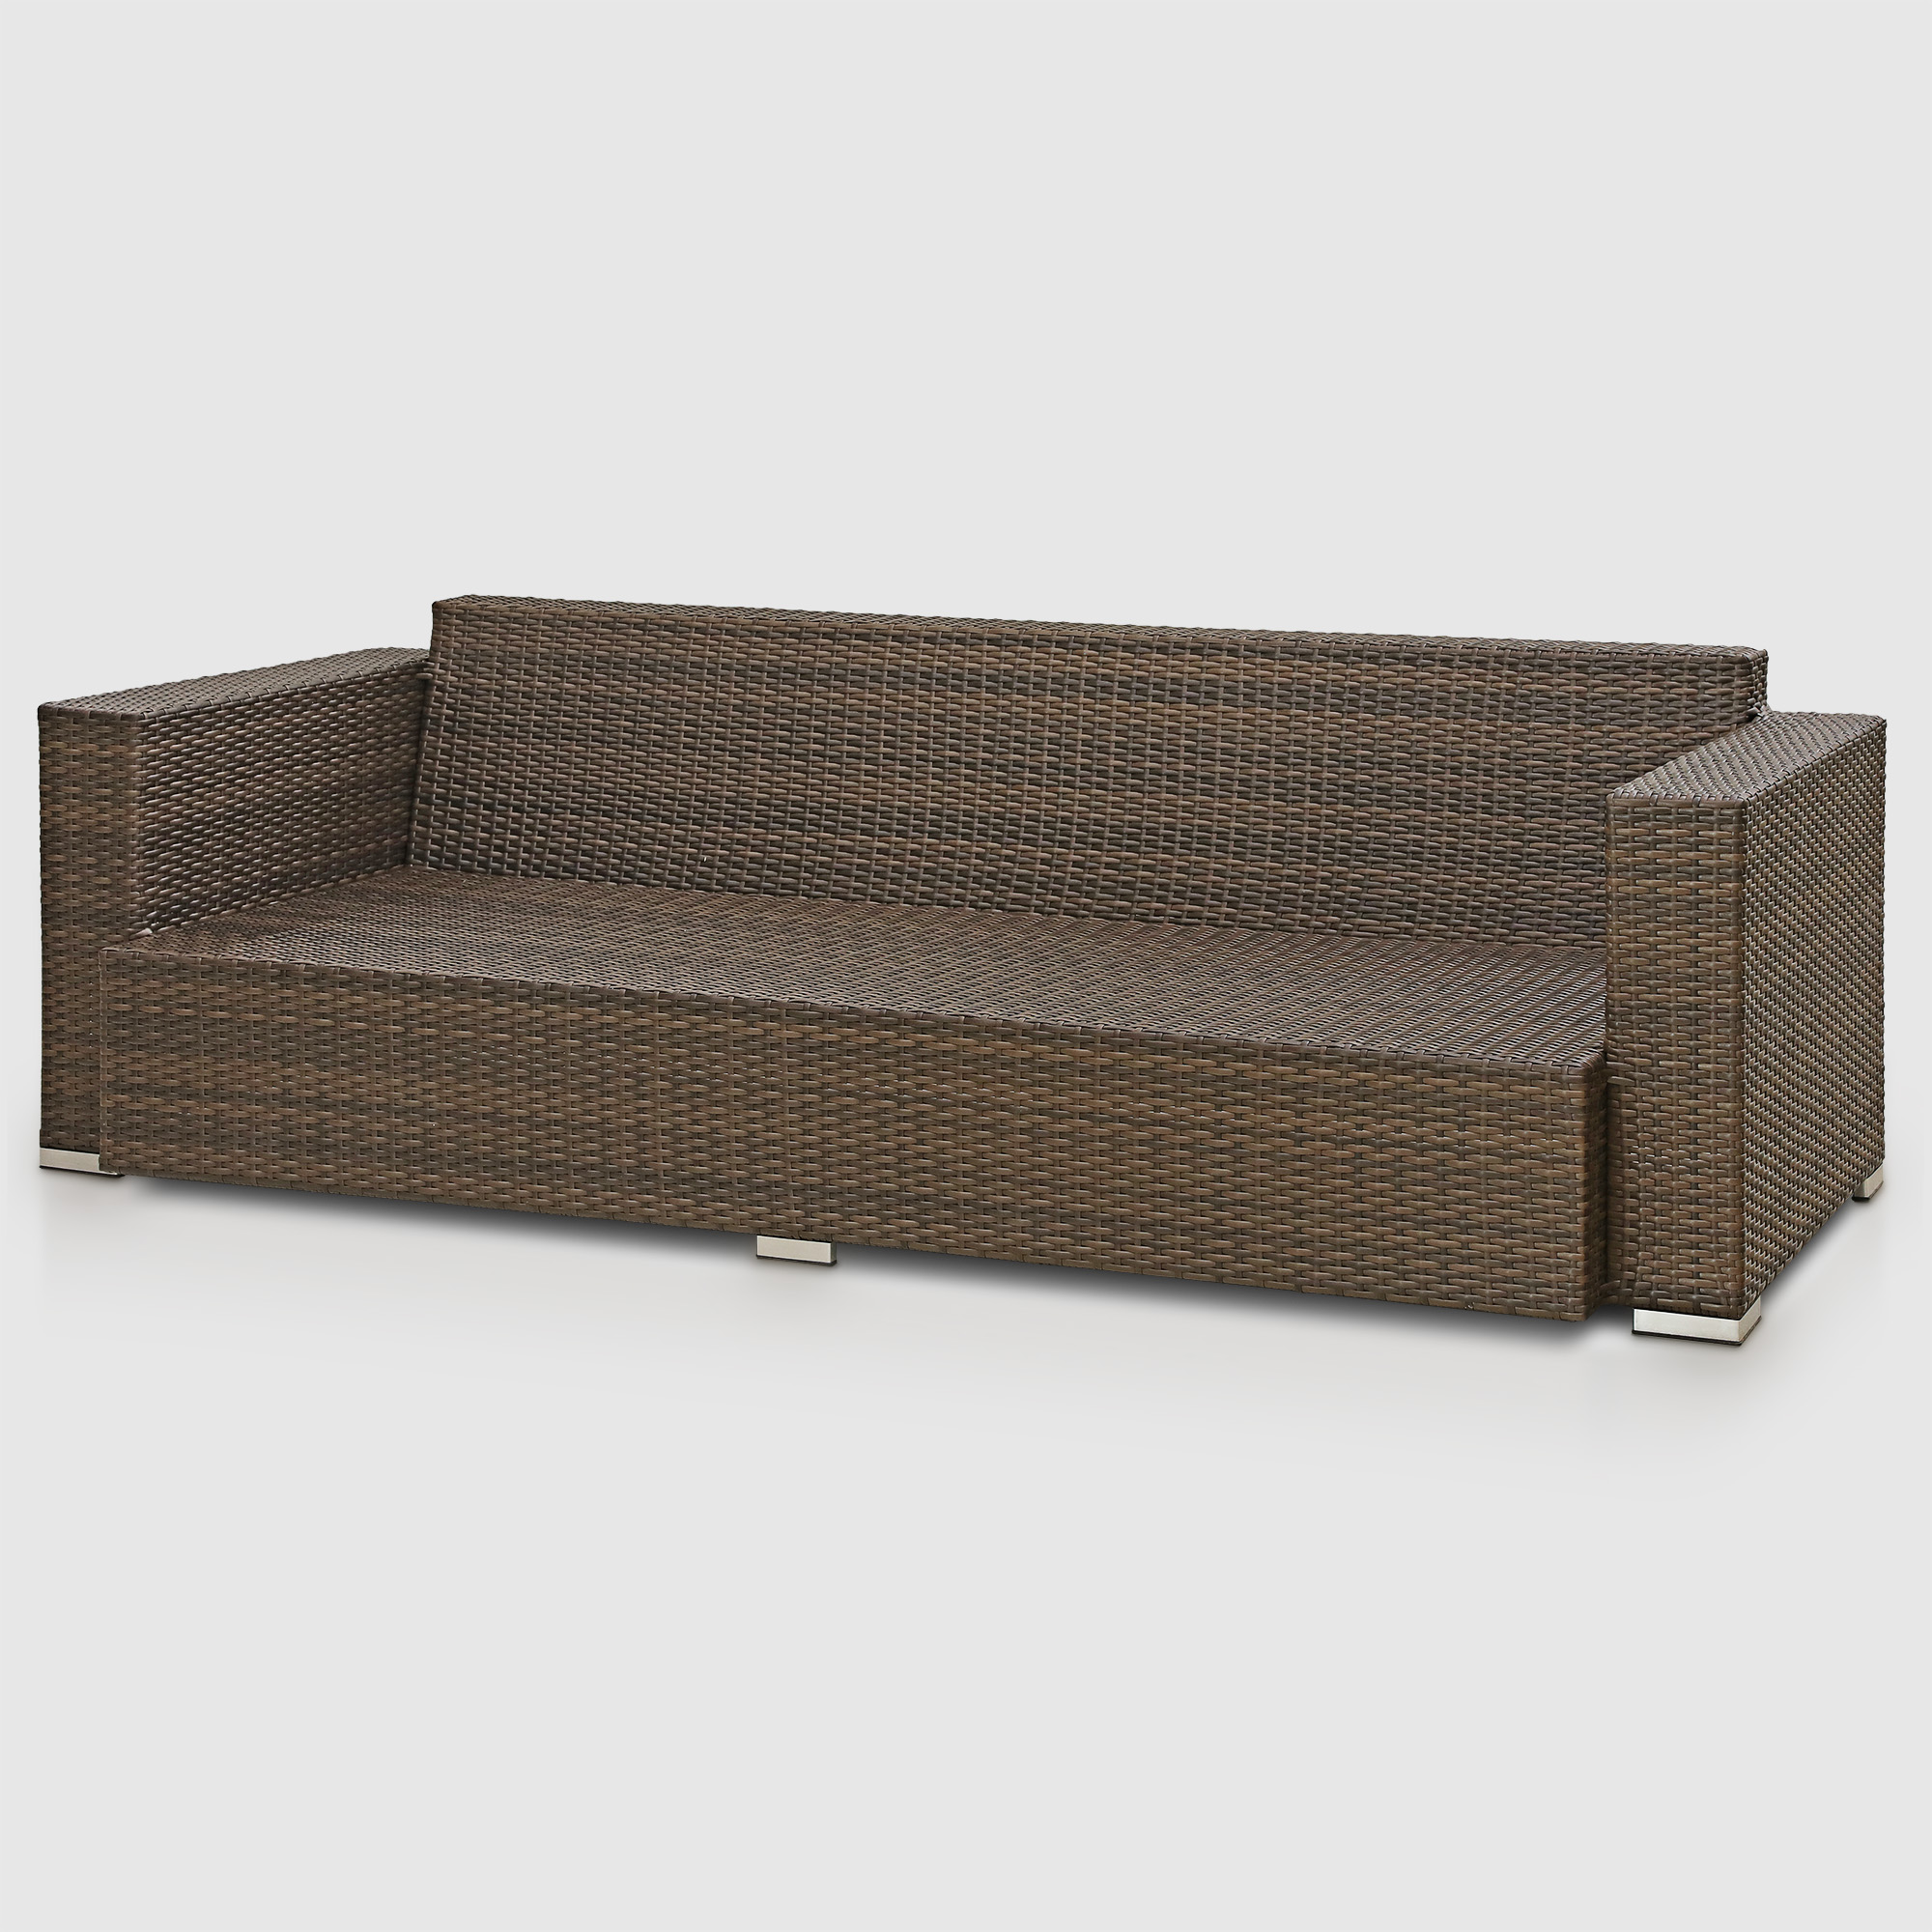 Комплект мебели Ns Rattan Cleo коричневый с бежевым 7 предметов, цвет бежевый, размер 224х88х70 - фото 14